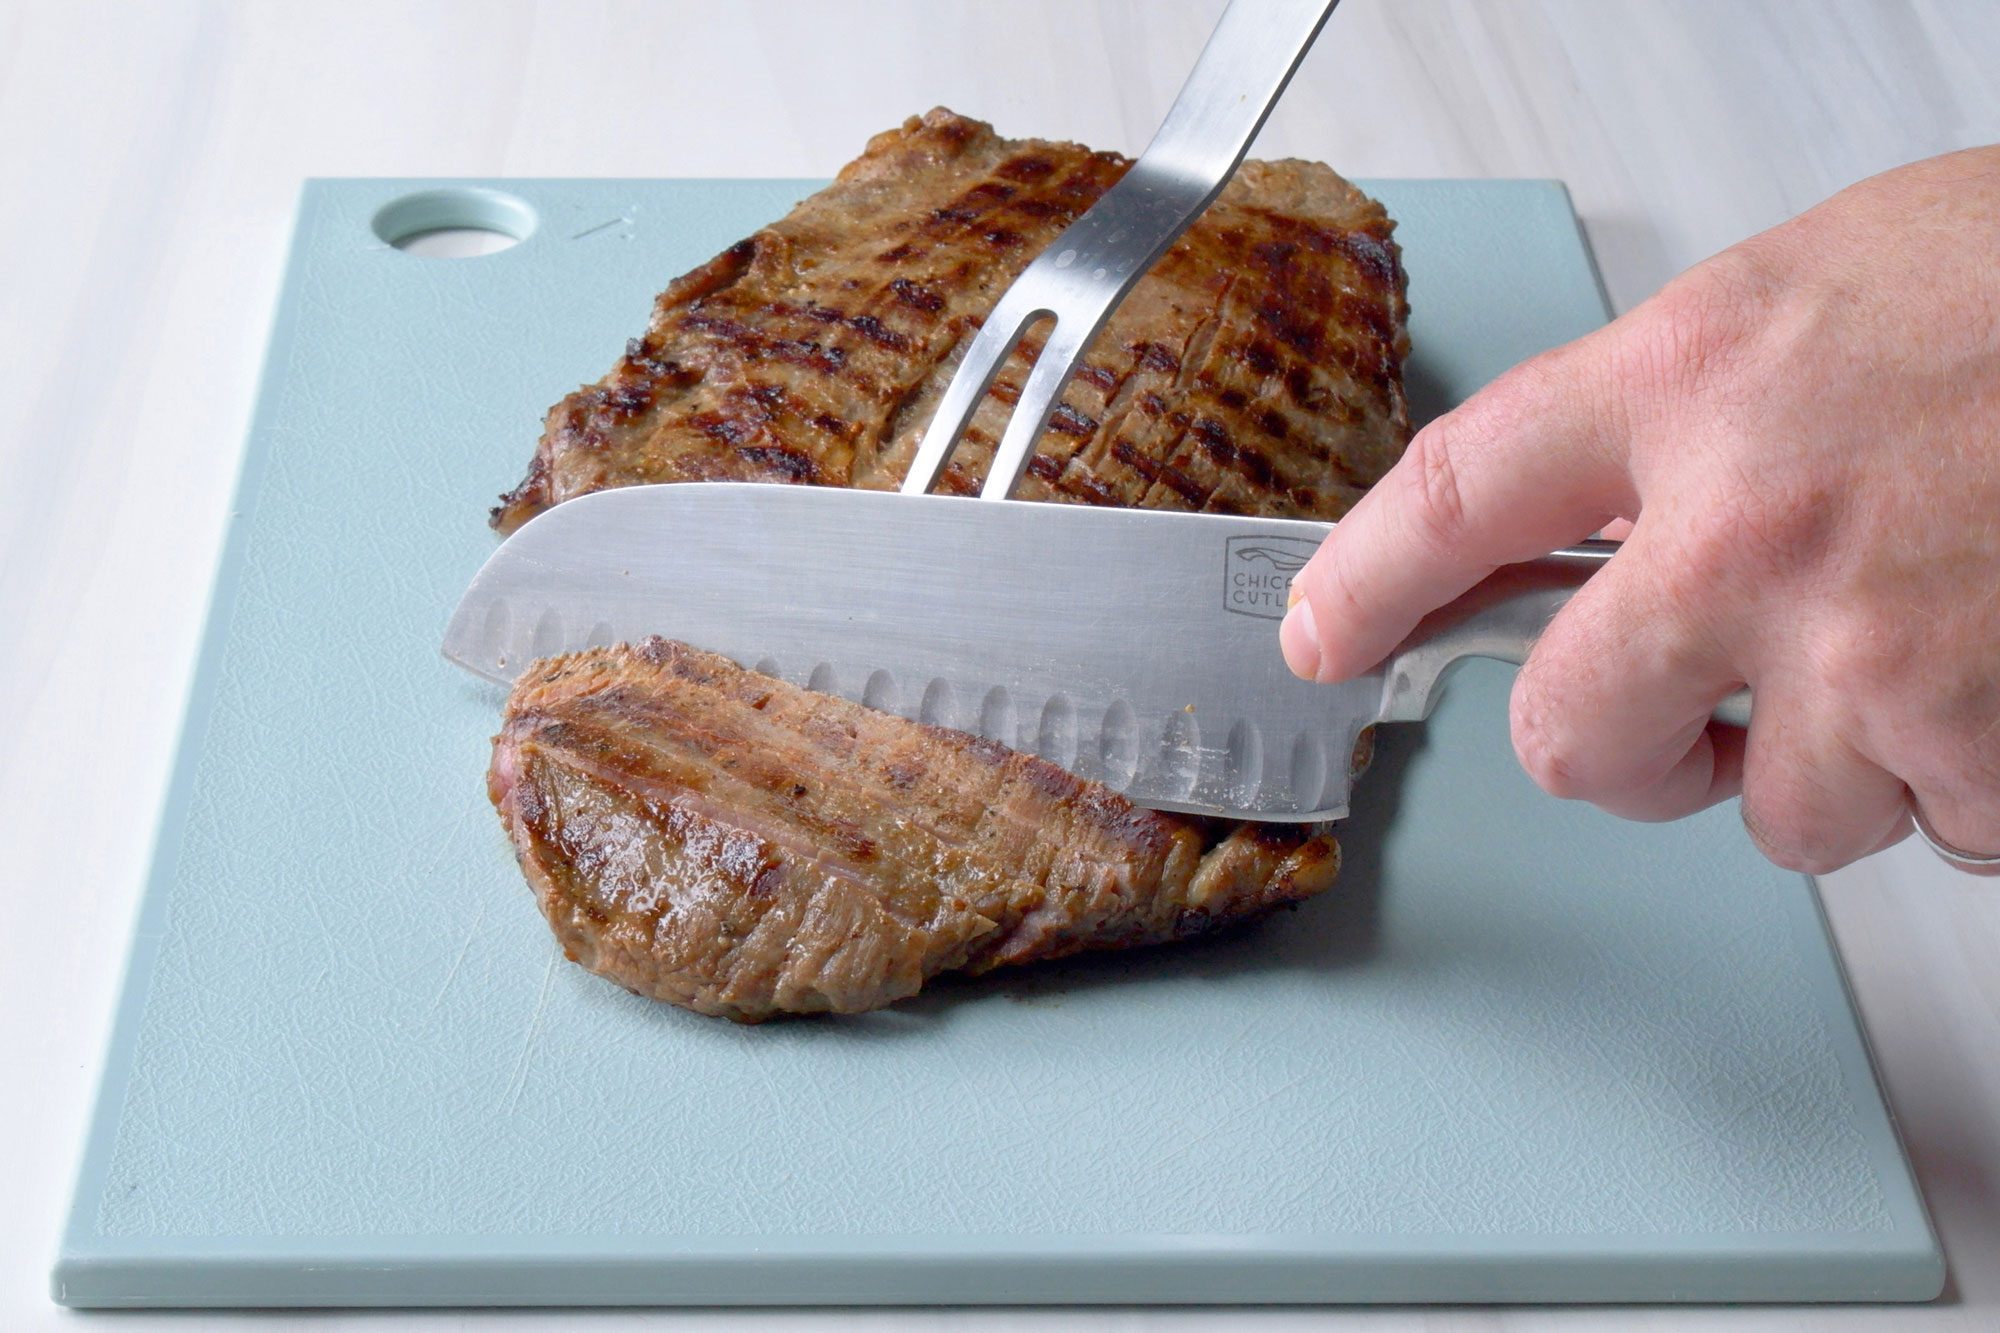 Slice the grilled steak